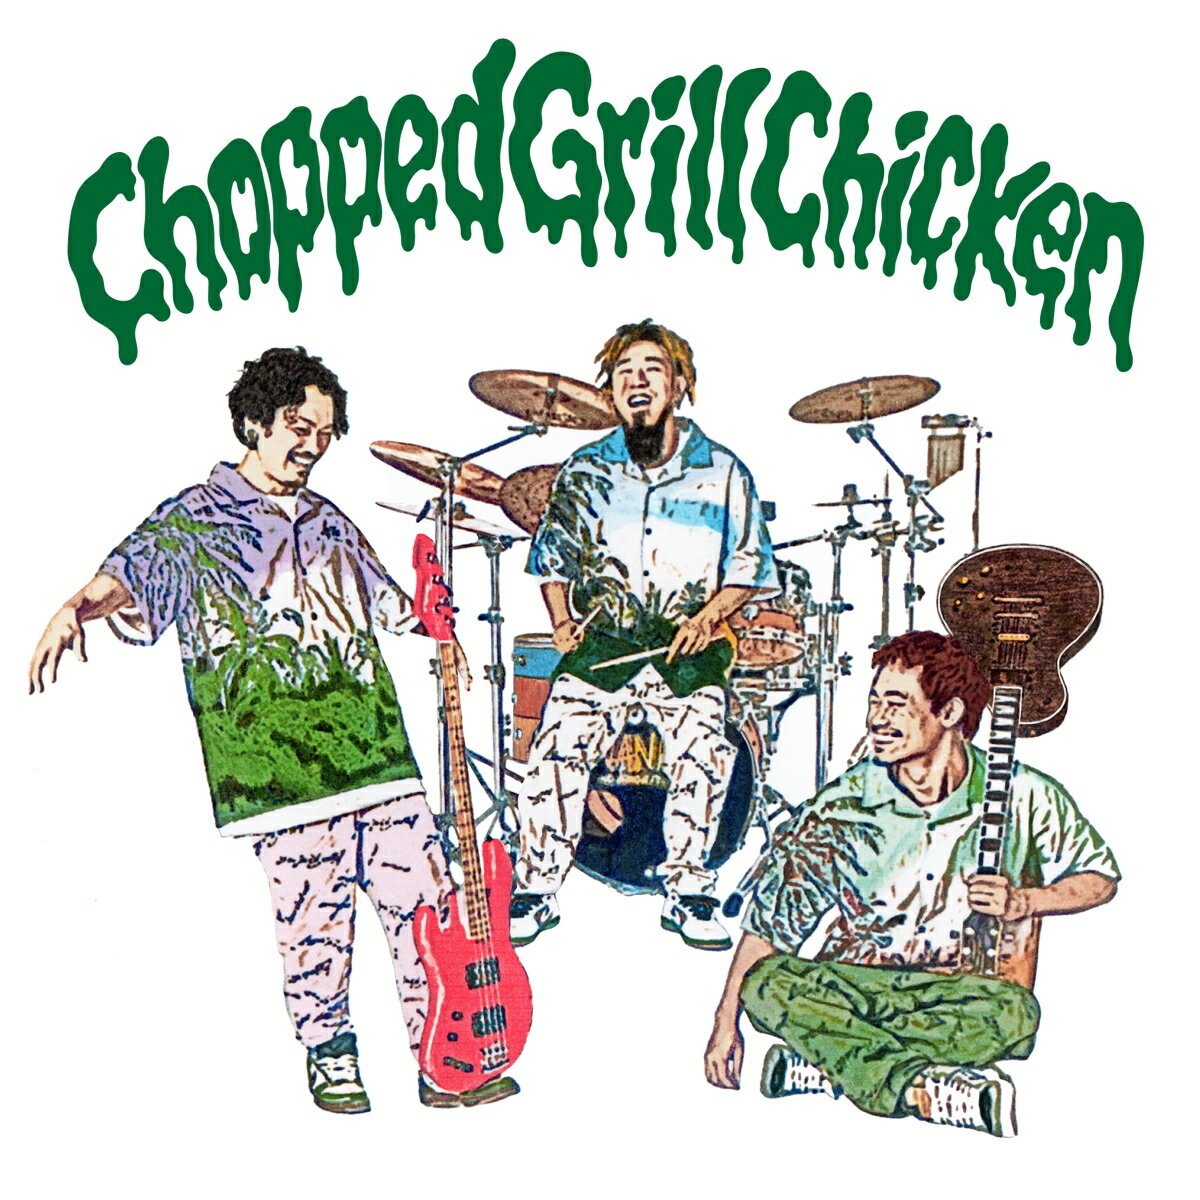 Chopped Grill Chicken (初回限定盤 CD＋DVD)